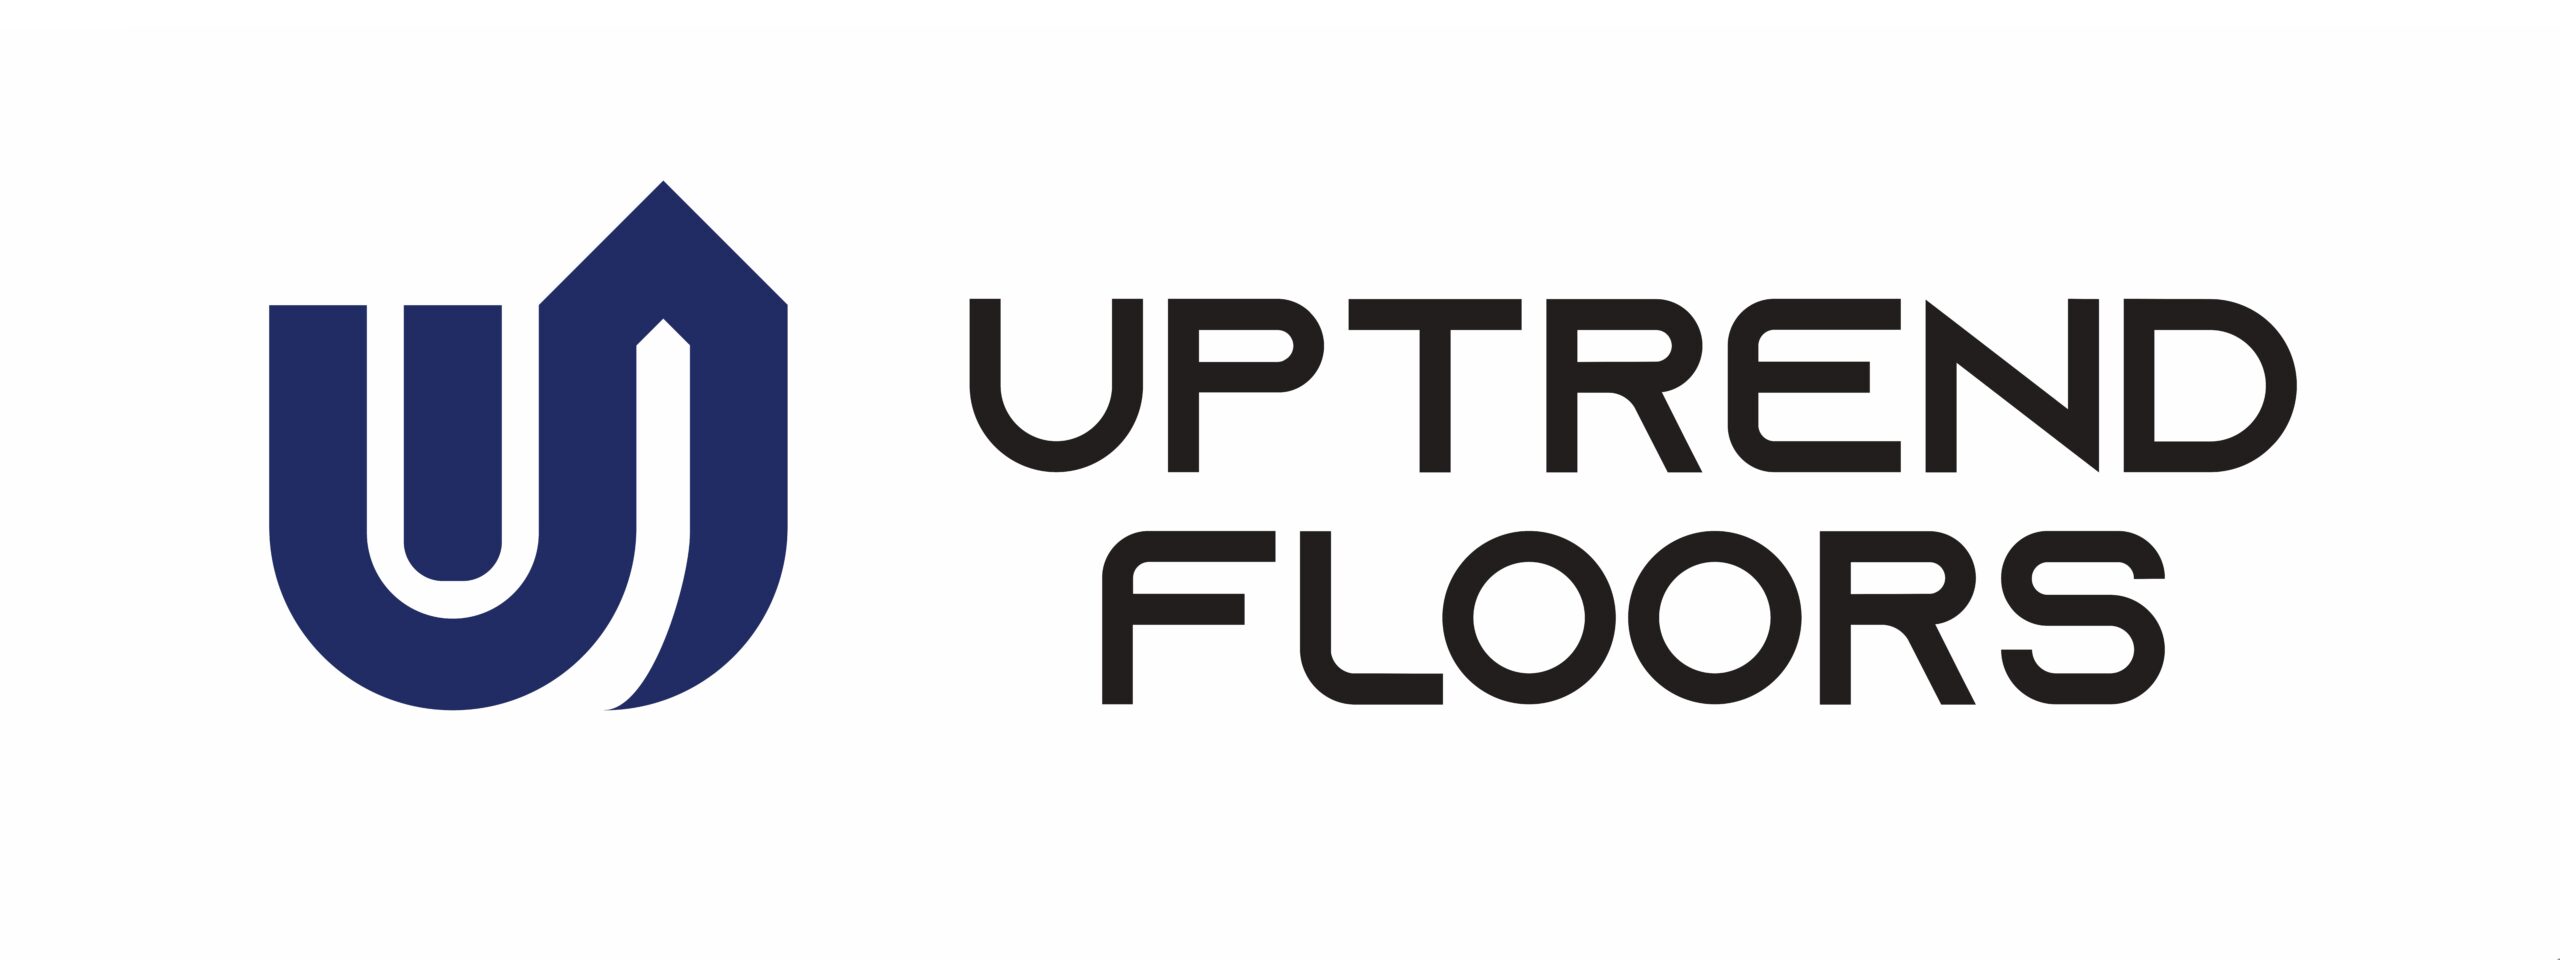 Uptrend Floors